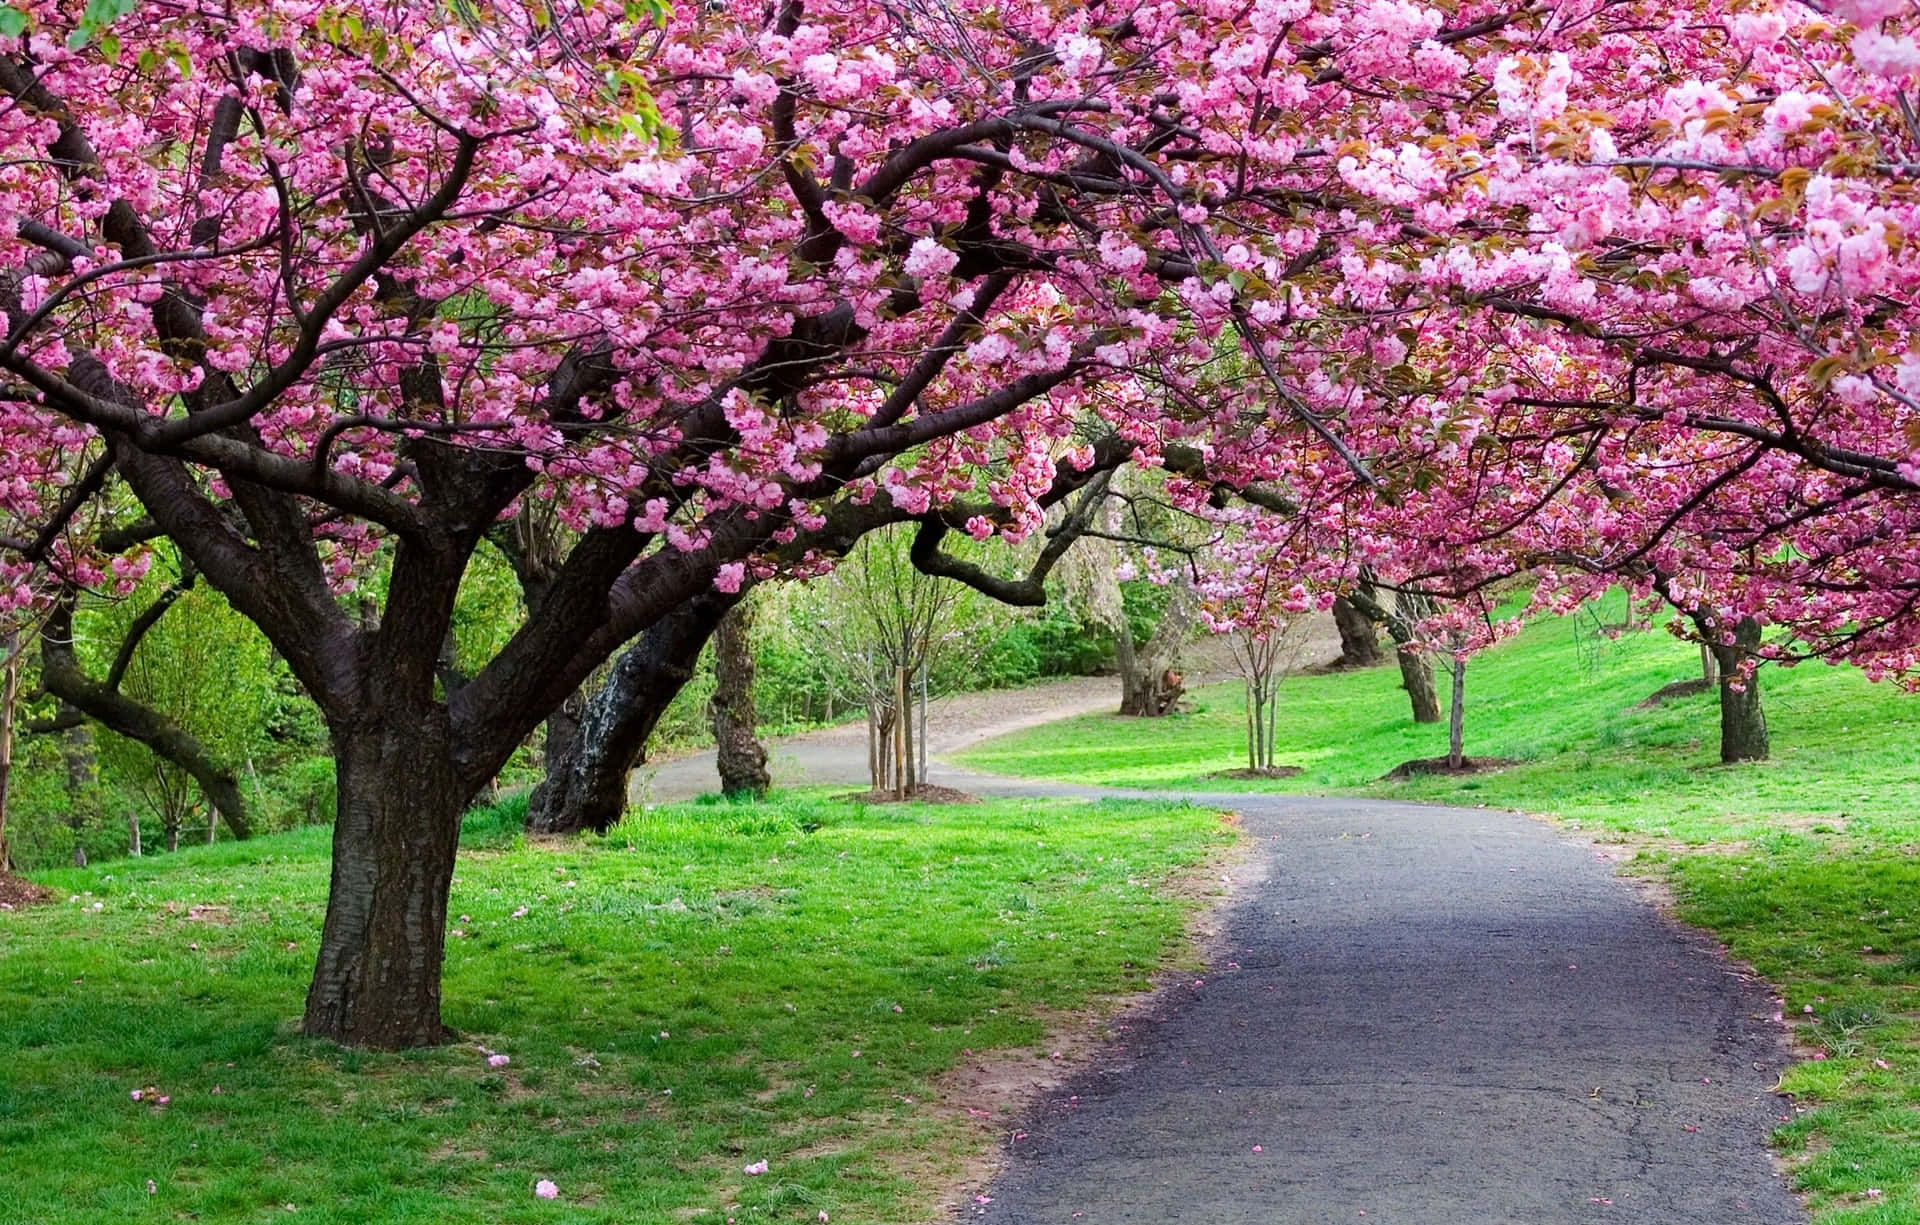 Download Beautiful Blooming Trees in Spring Wallpaper | Wallpapers.com